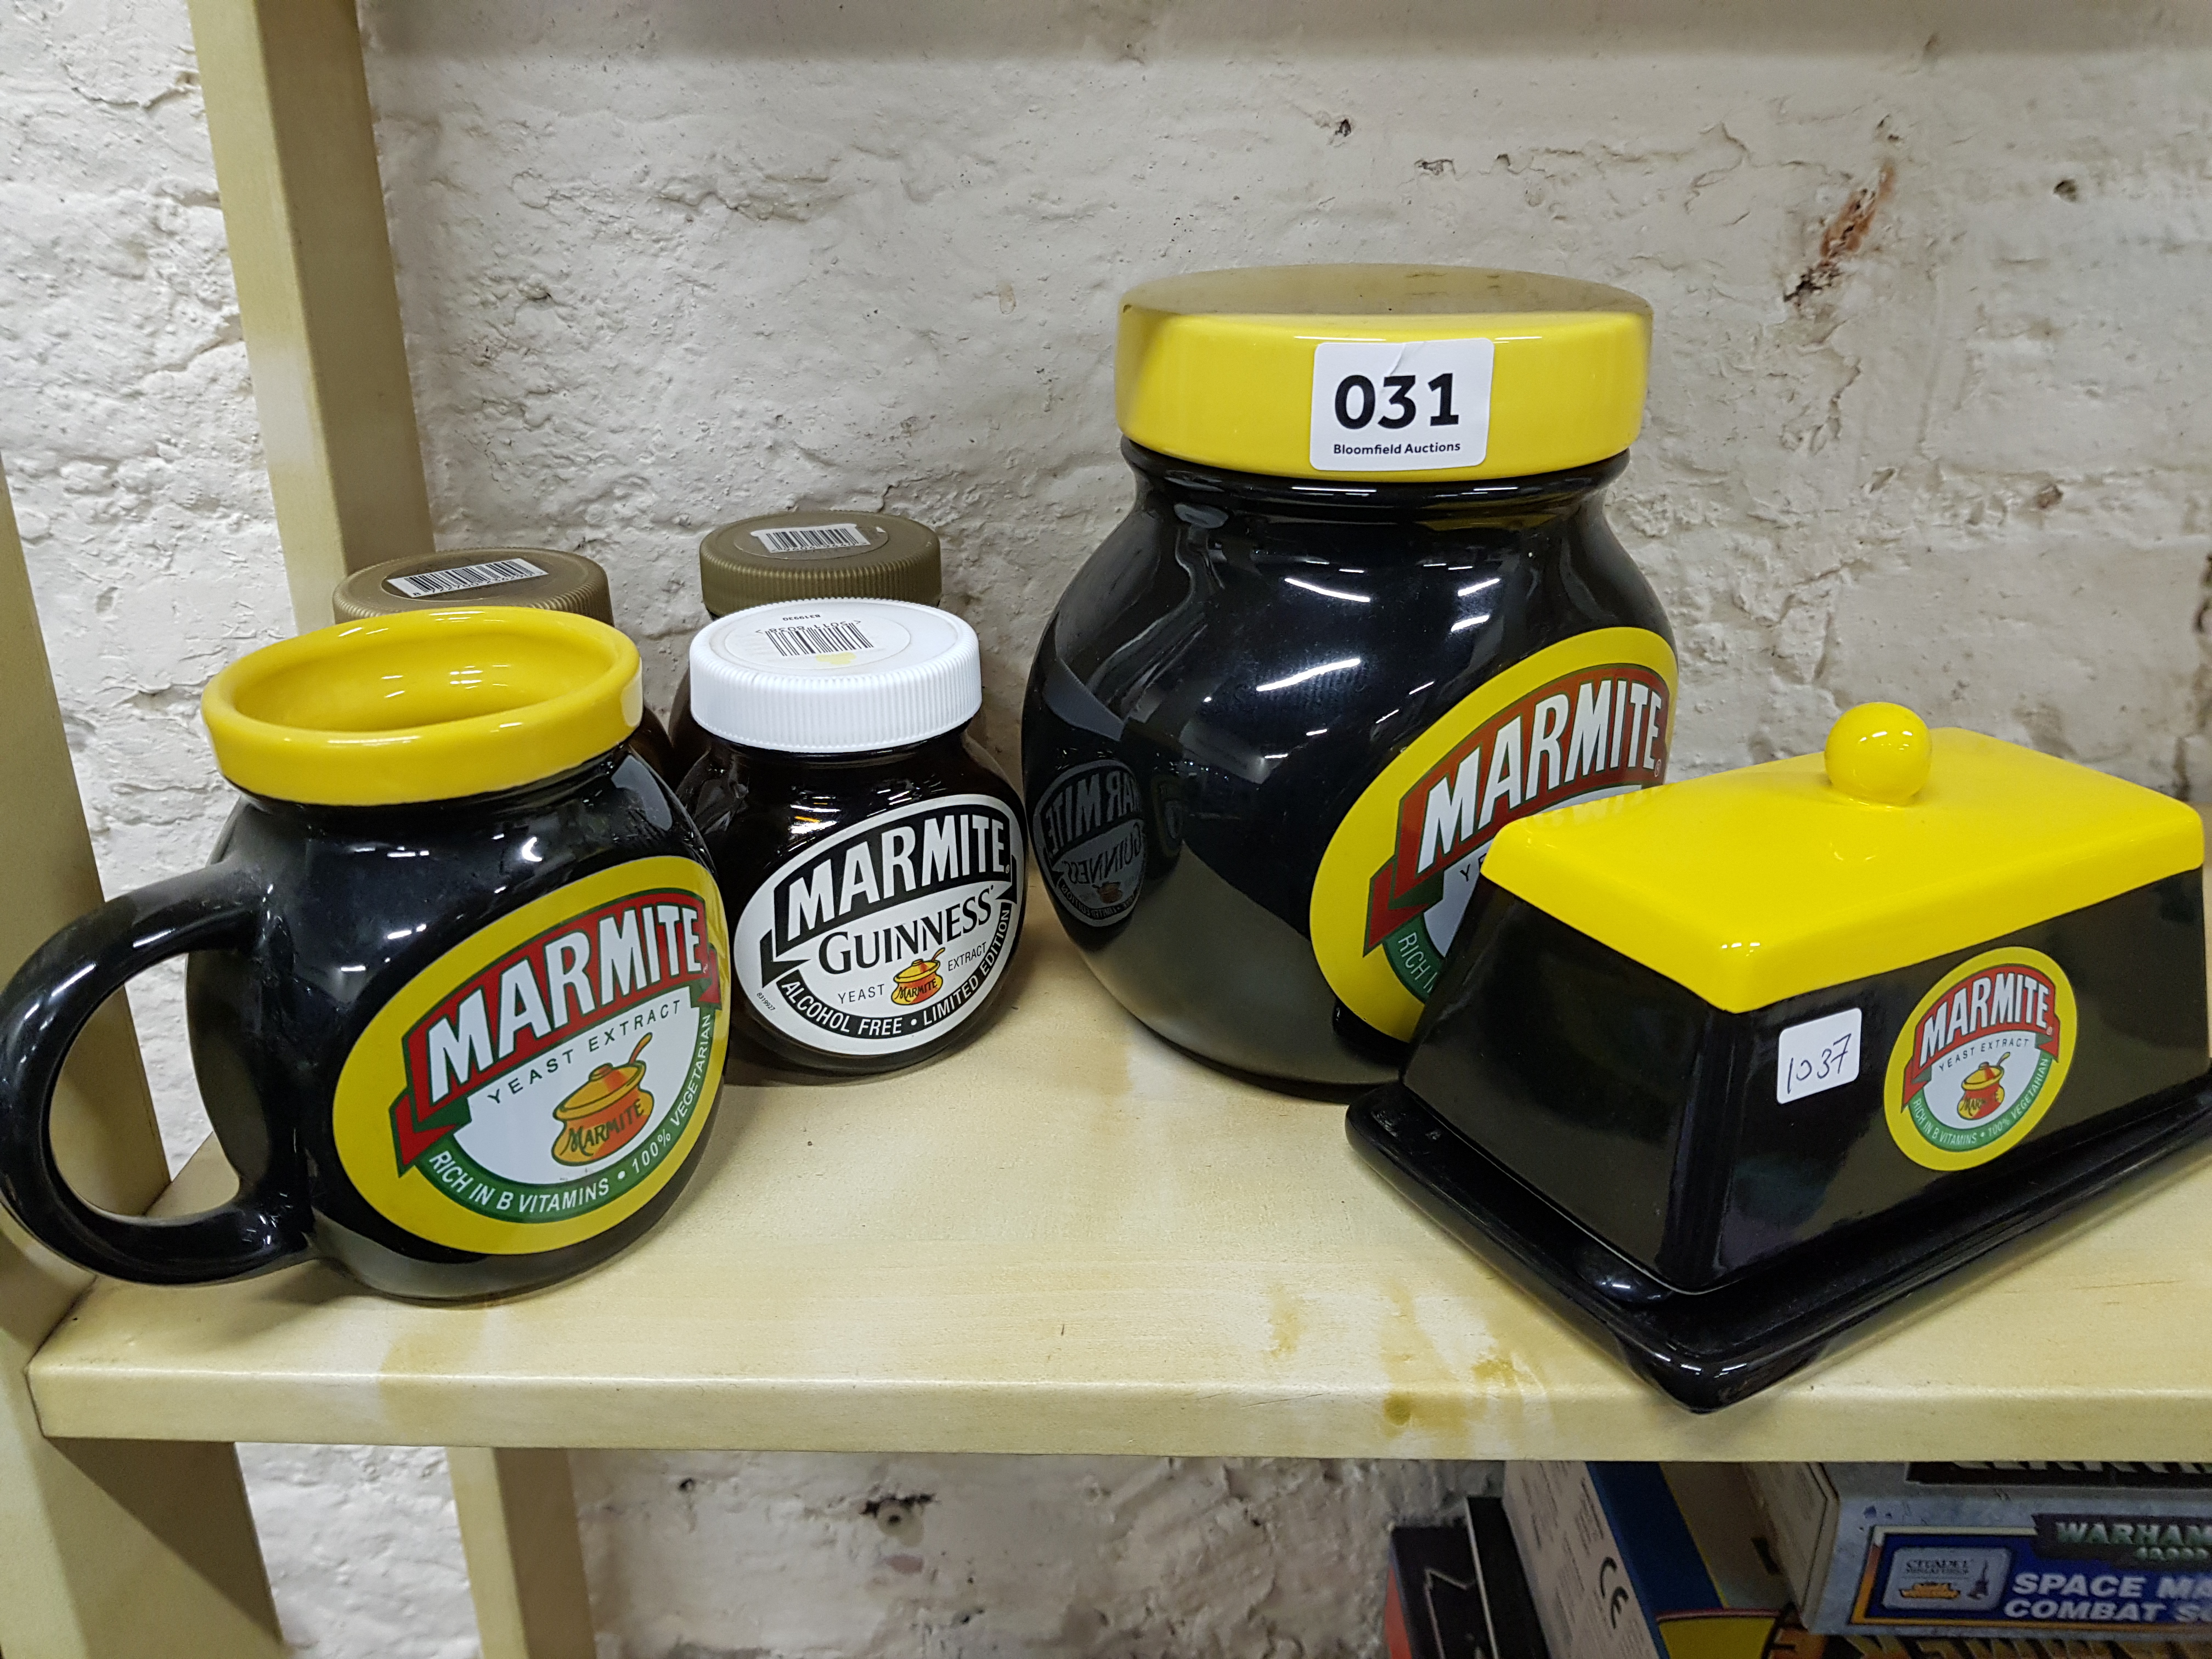 Shelf lot of old Marmite jars